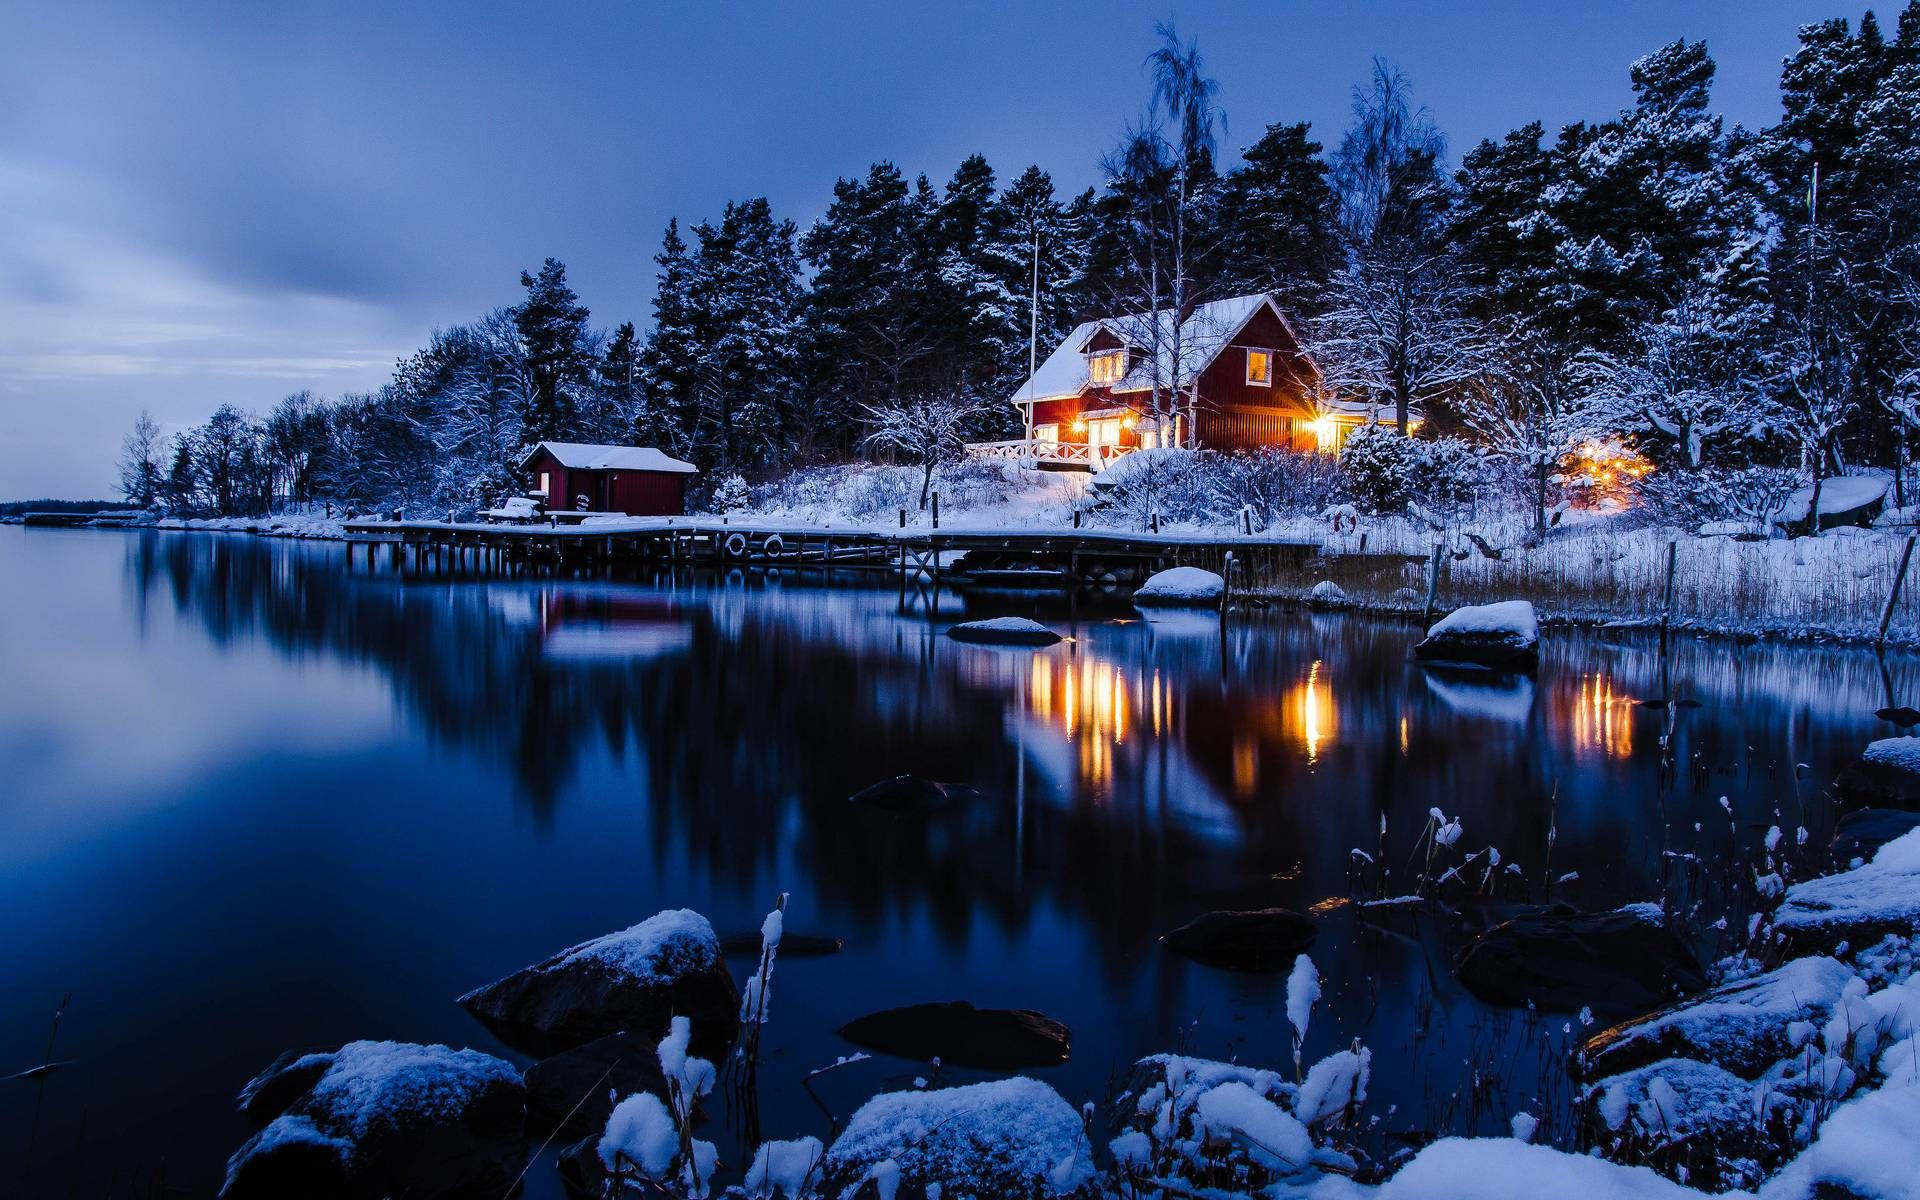 Night Cabin Winter Scenery In Sweden Background